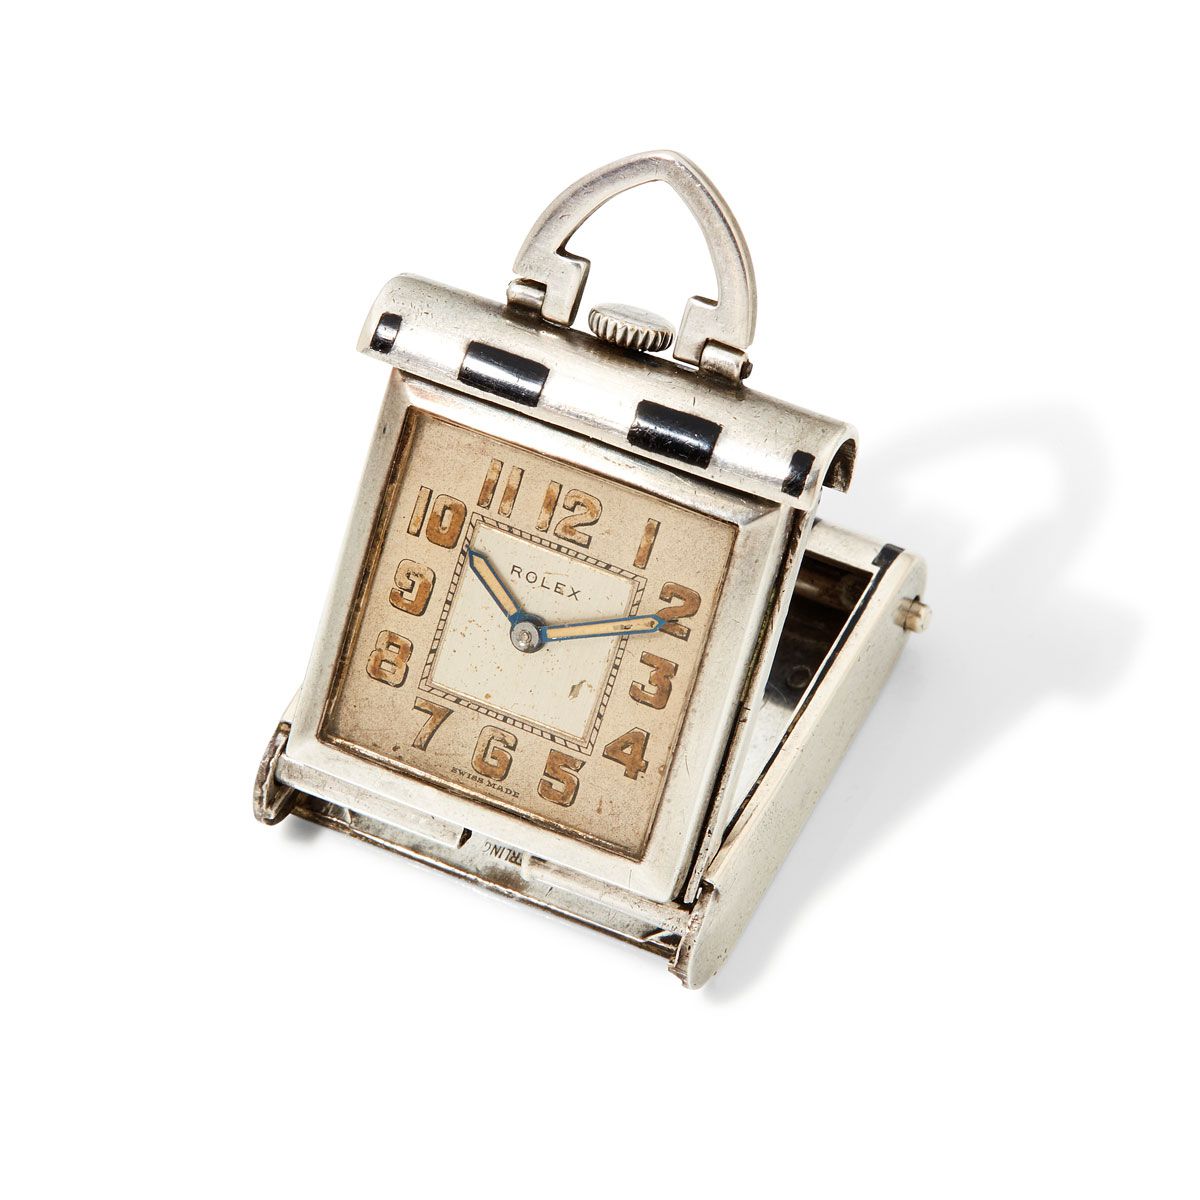 Null Rolex, No. 67870, circa 1930.

A rare Art Deco silver bedside clock with en&hellip;